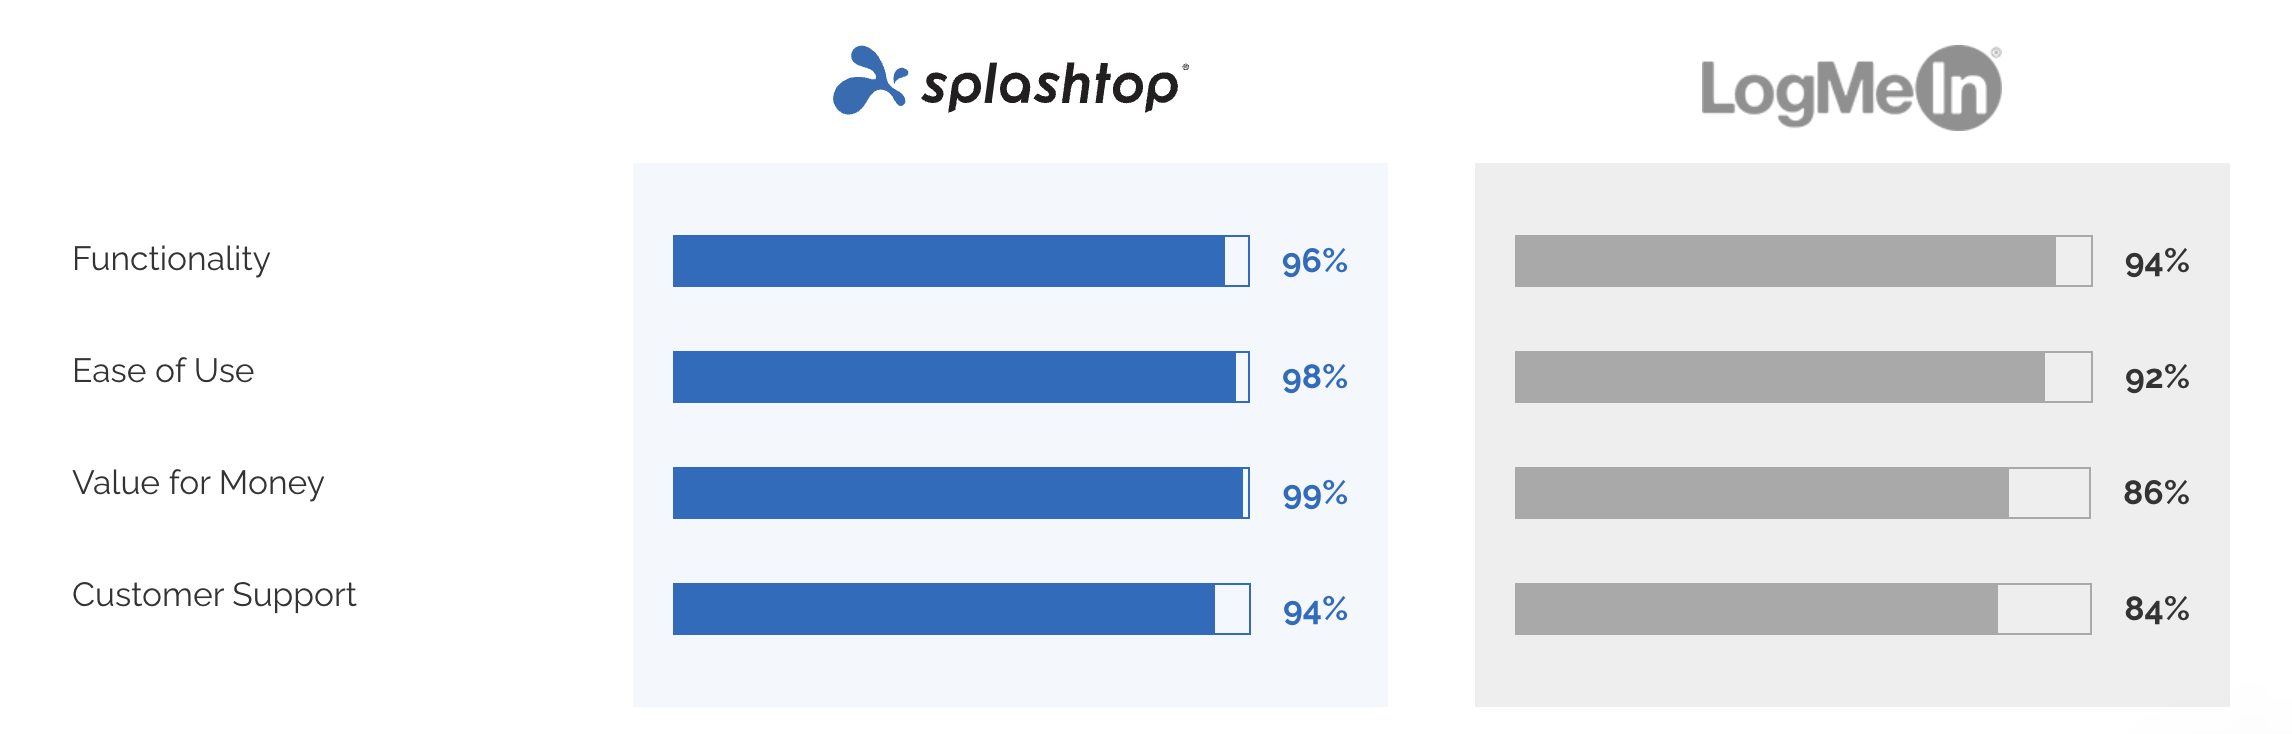 Splashtop vs LogMeIn